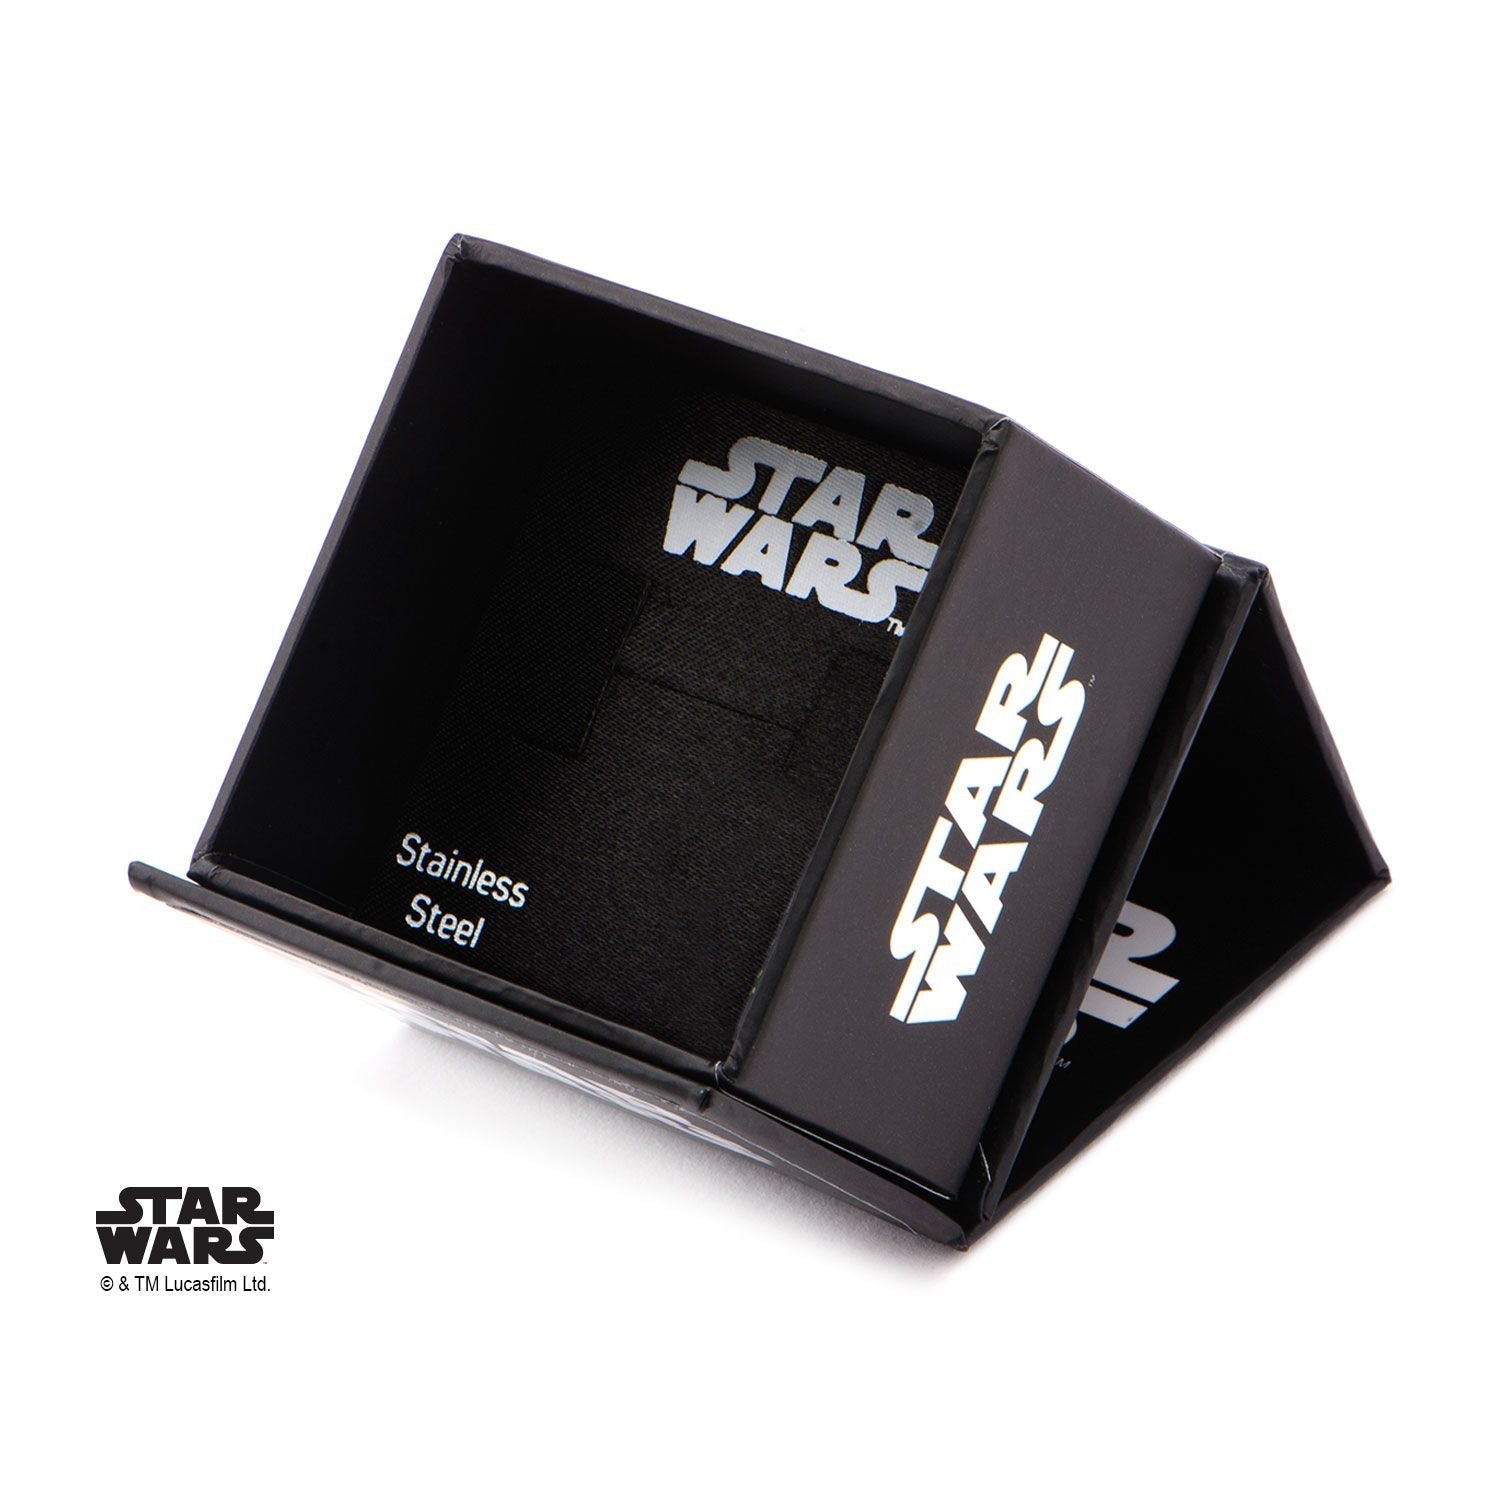 STAR WARS Star Wars Stormtrooper Square Top Ring -Rebel Bod-RebelBod